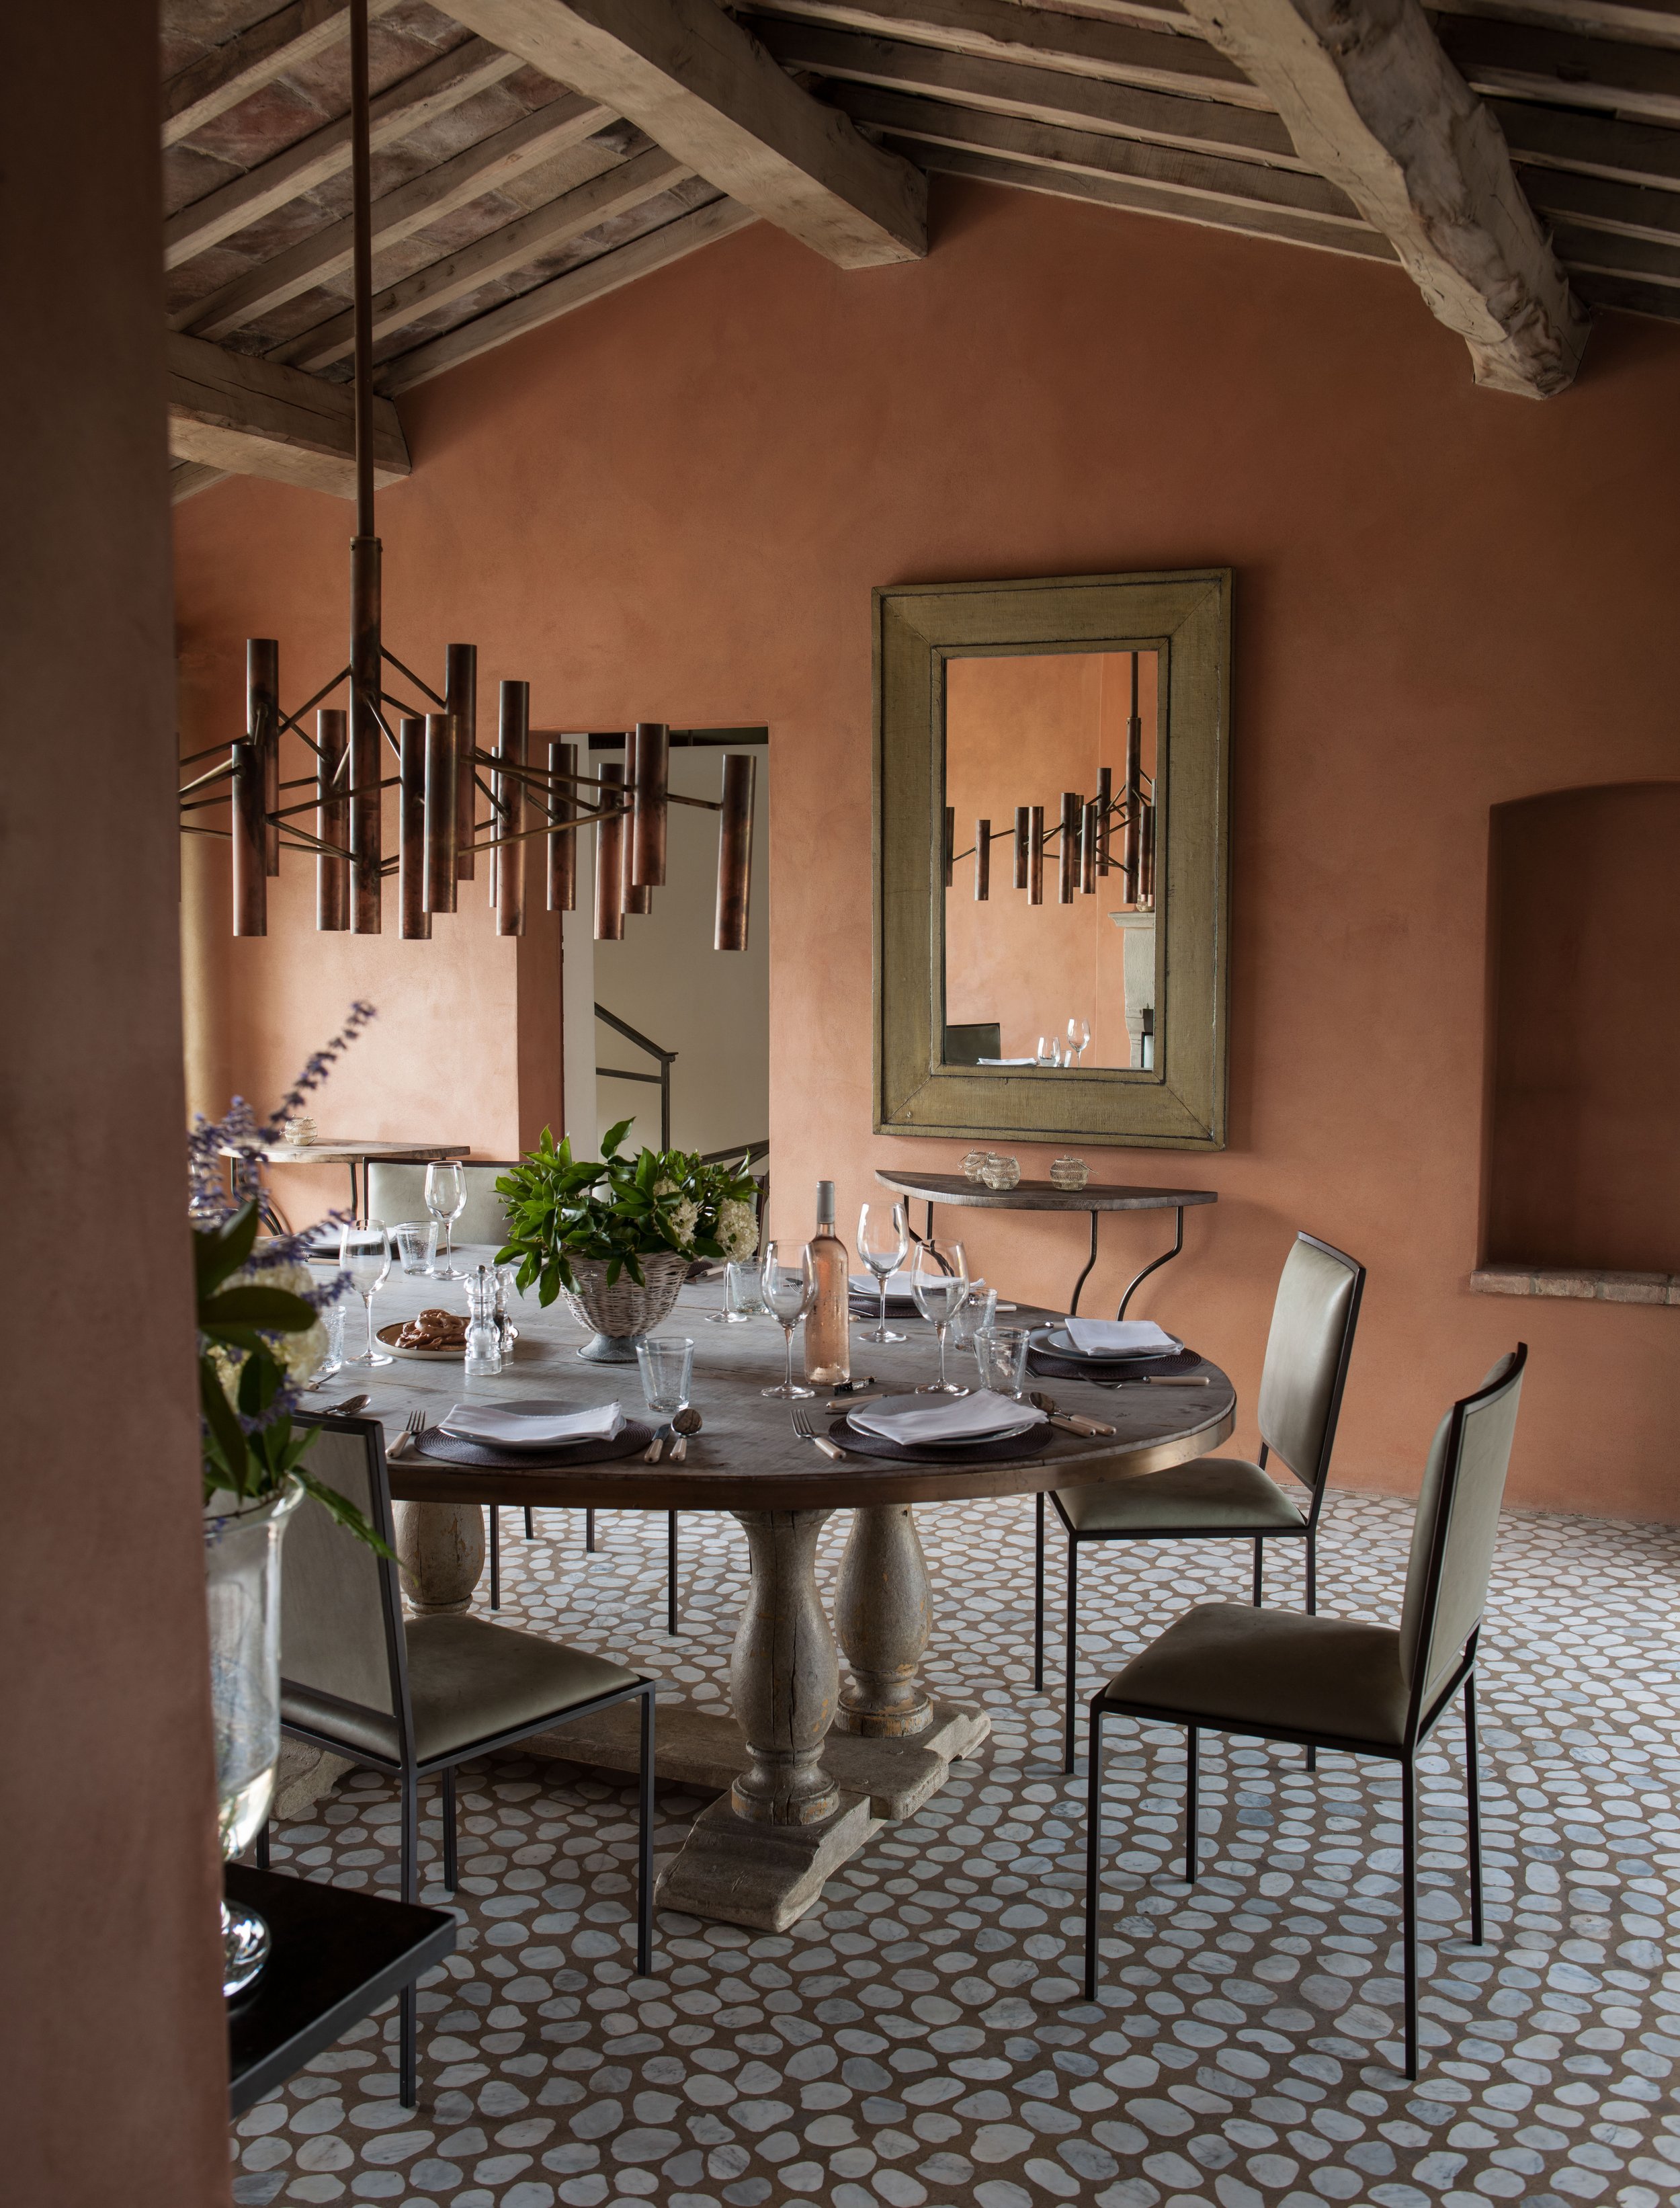 Francis York Exclusive Luxury Villa Rental in Umbria, Italy 9.jpg